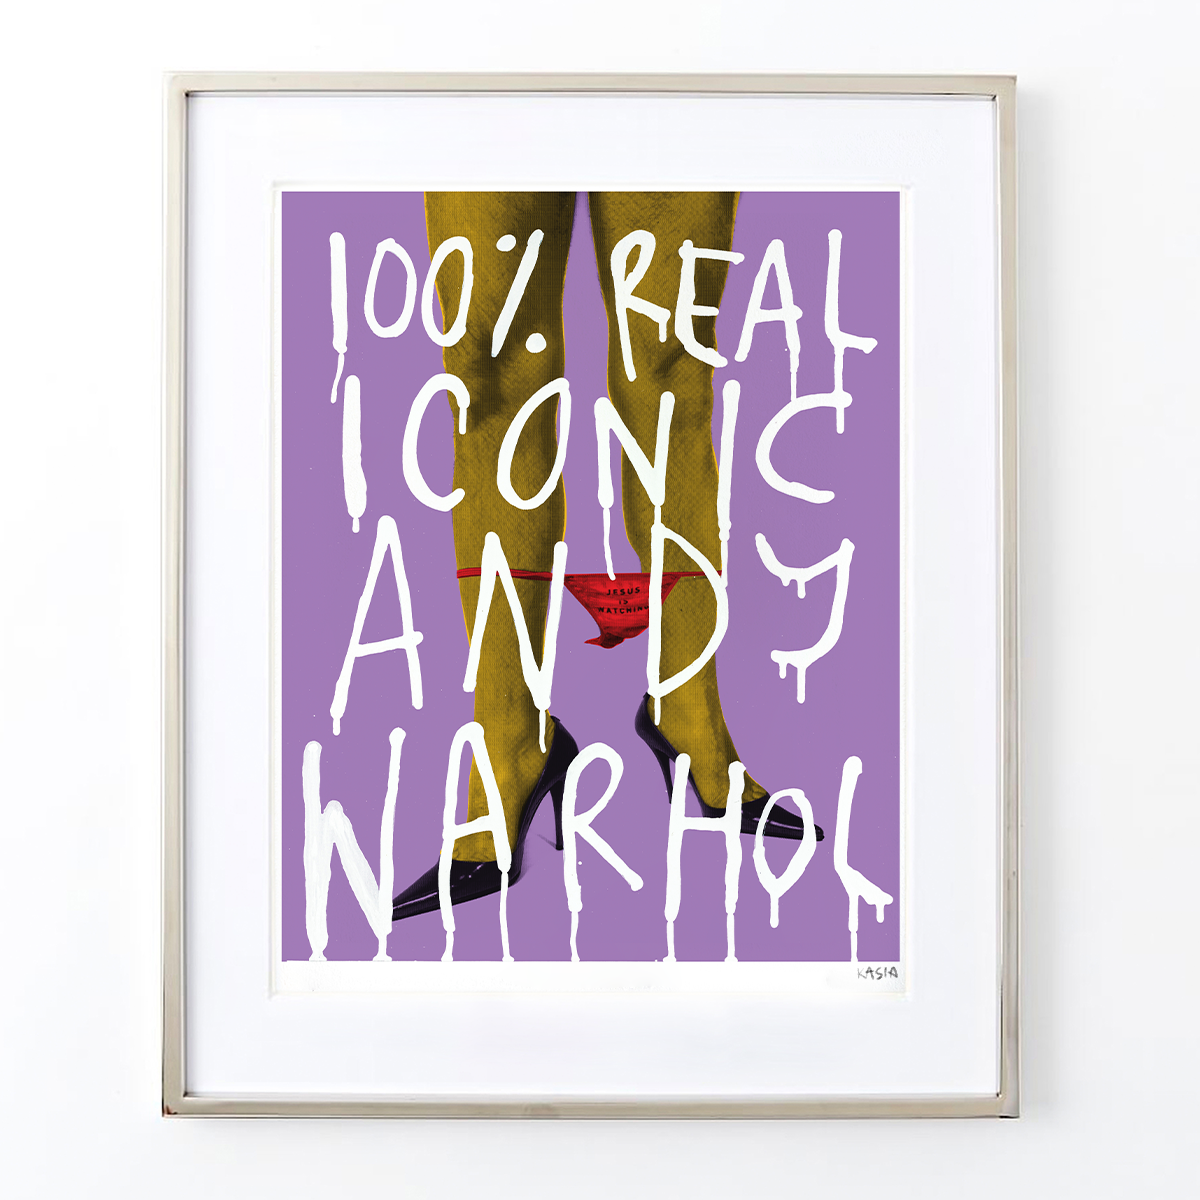 100% Real Iconic Andy Warhol (Hairy Legs Panties Down Jesus is Watching)